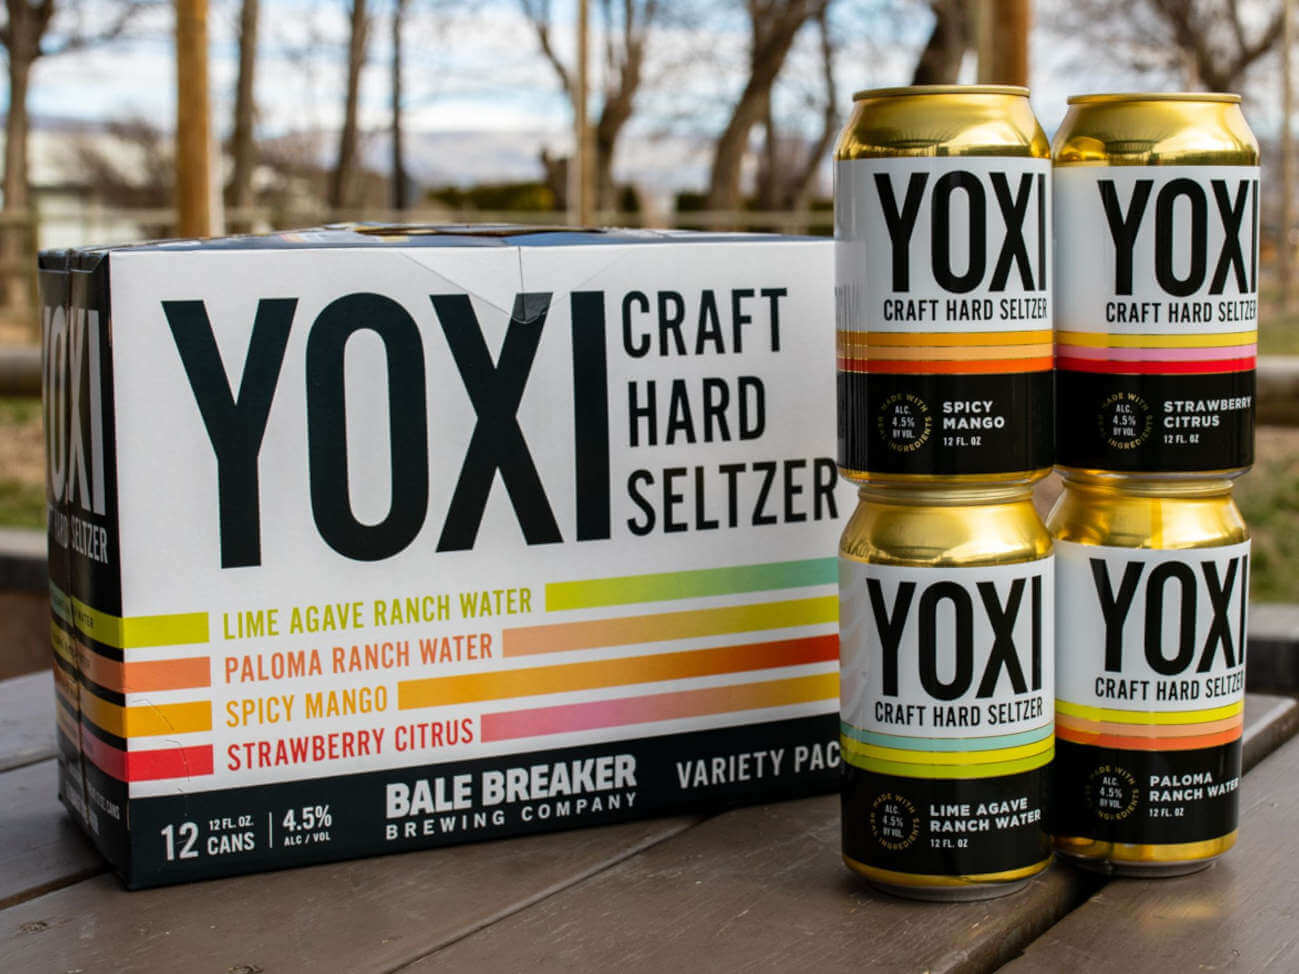 Bale Breaker expands its hard seltzer line with YOXI Craft Hard Seltzer variety packs